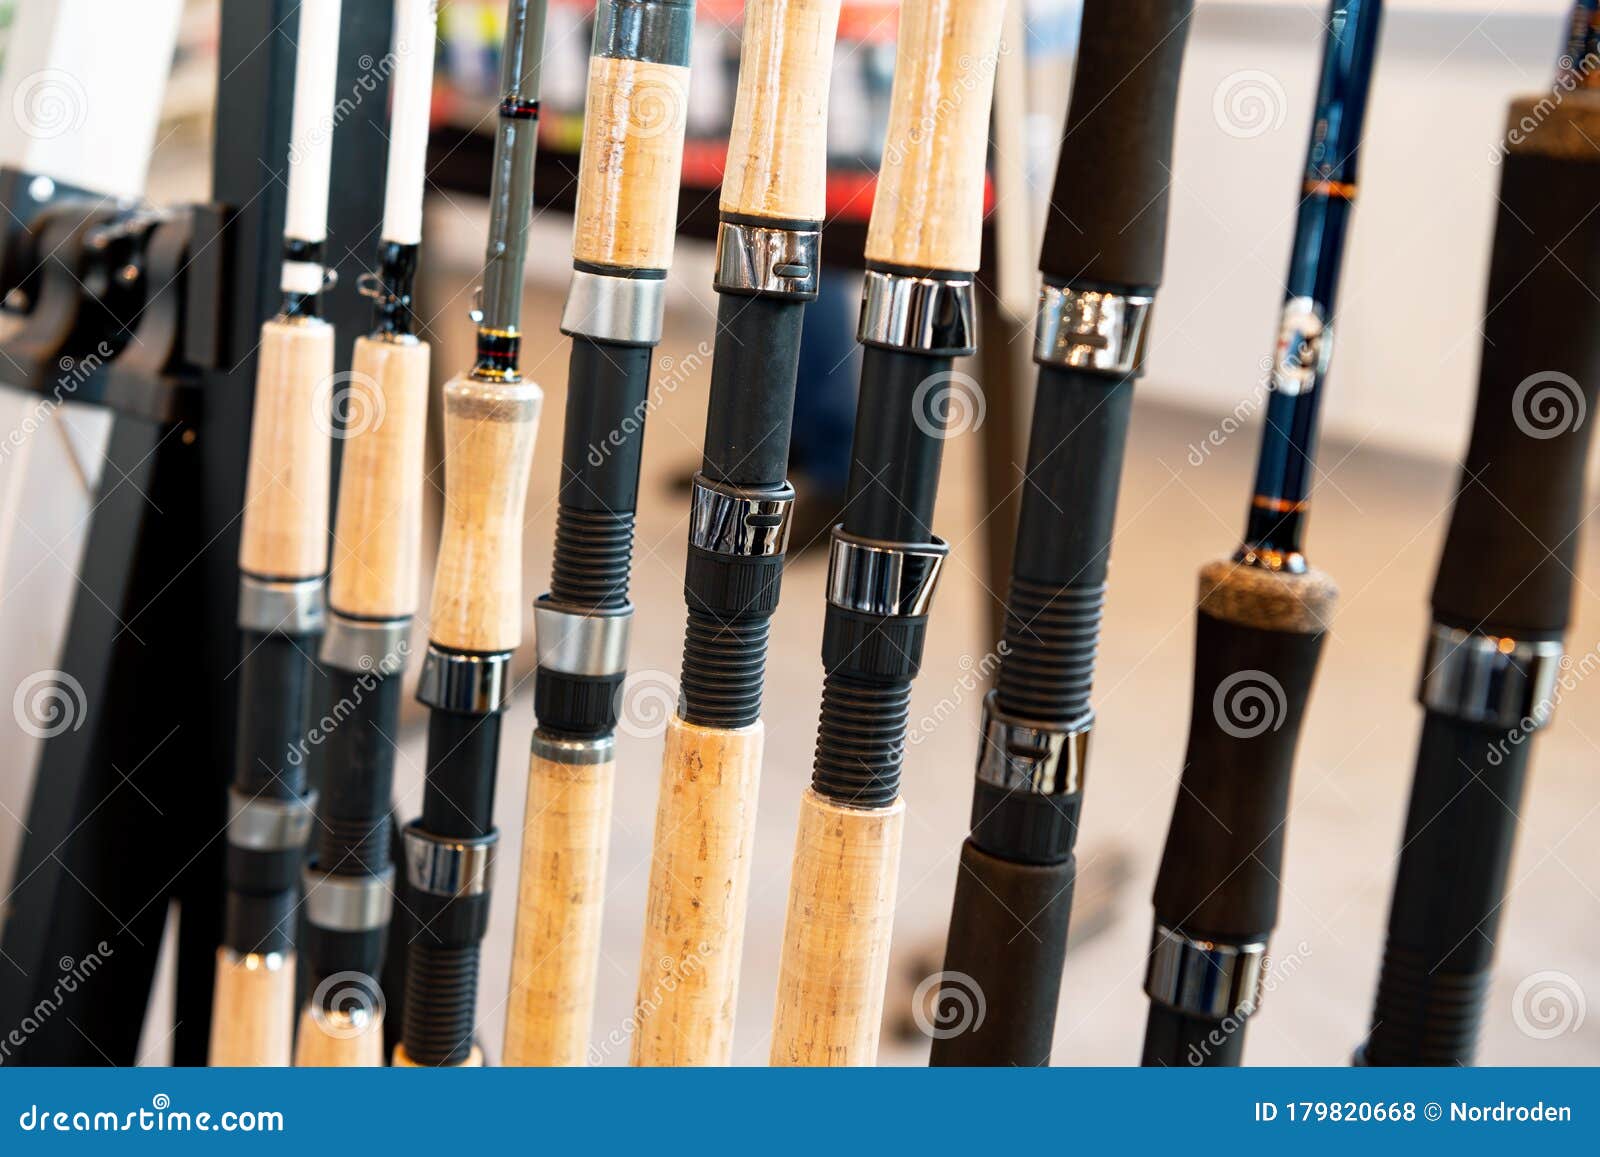 Lots of fishing rods. stock photo. Image of sticks, equipment